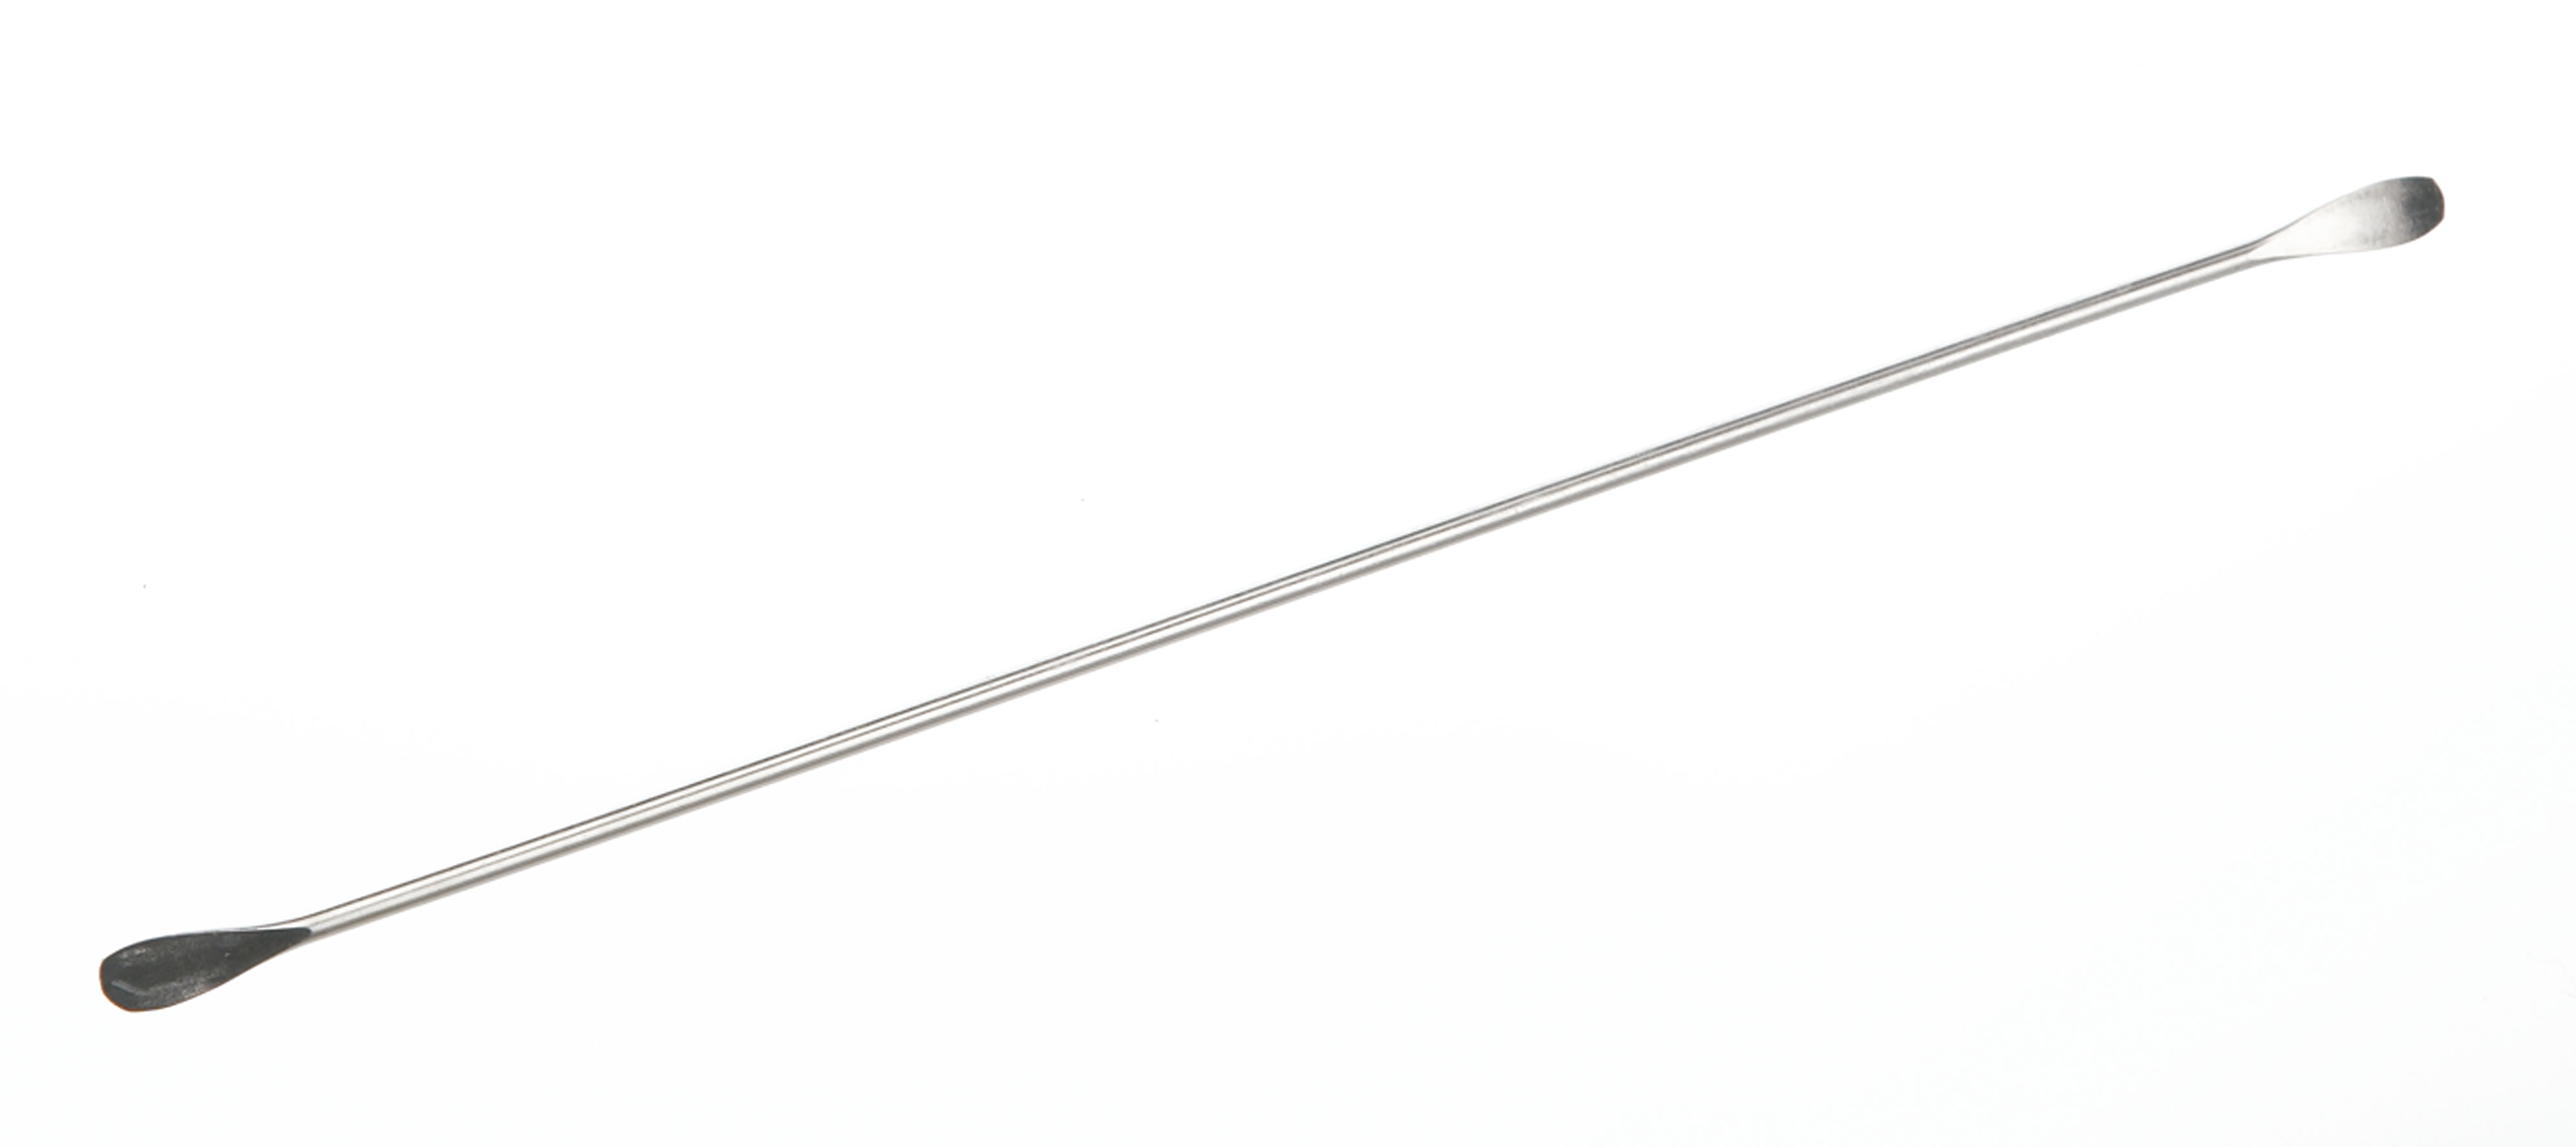 Espátula doble, en forma de cuchara. Longitud/Ancho (mm): 5x185